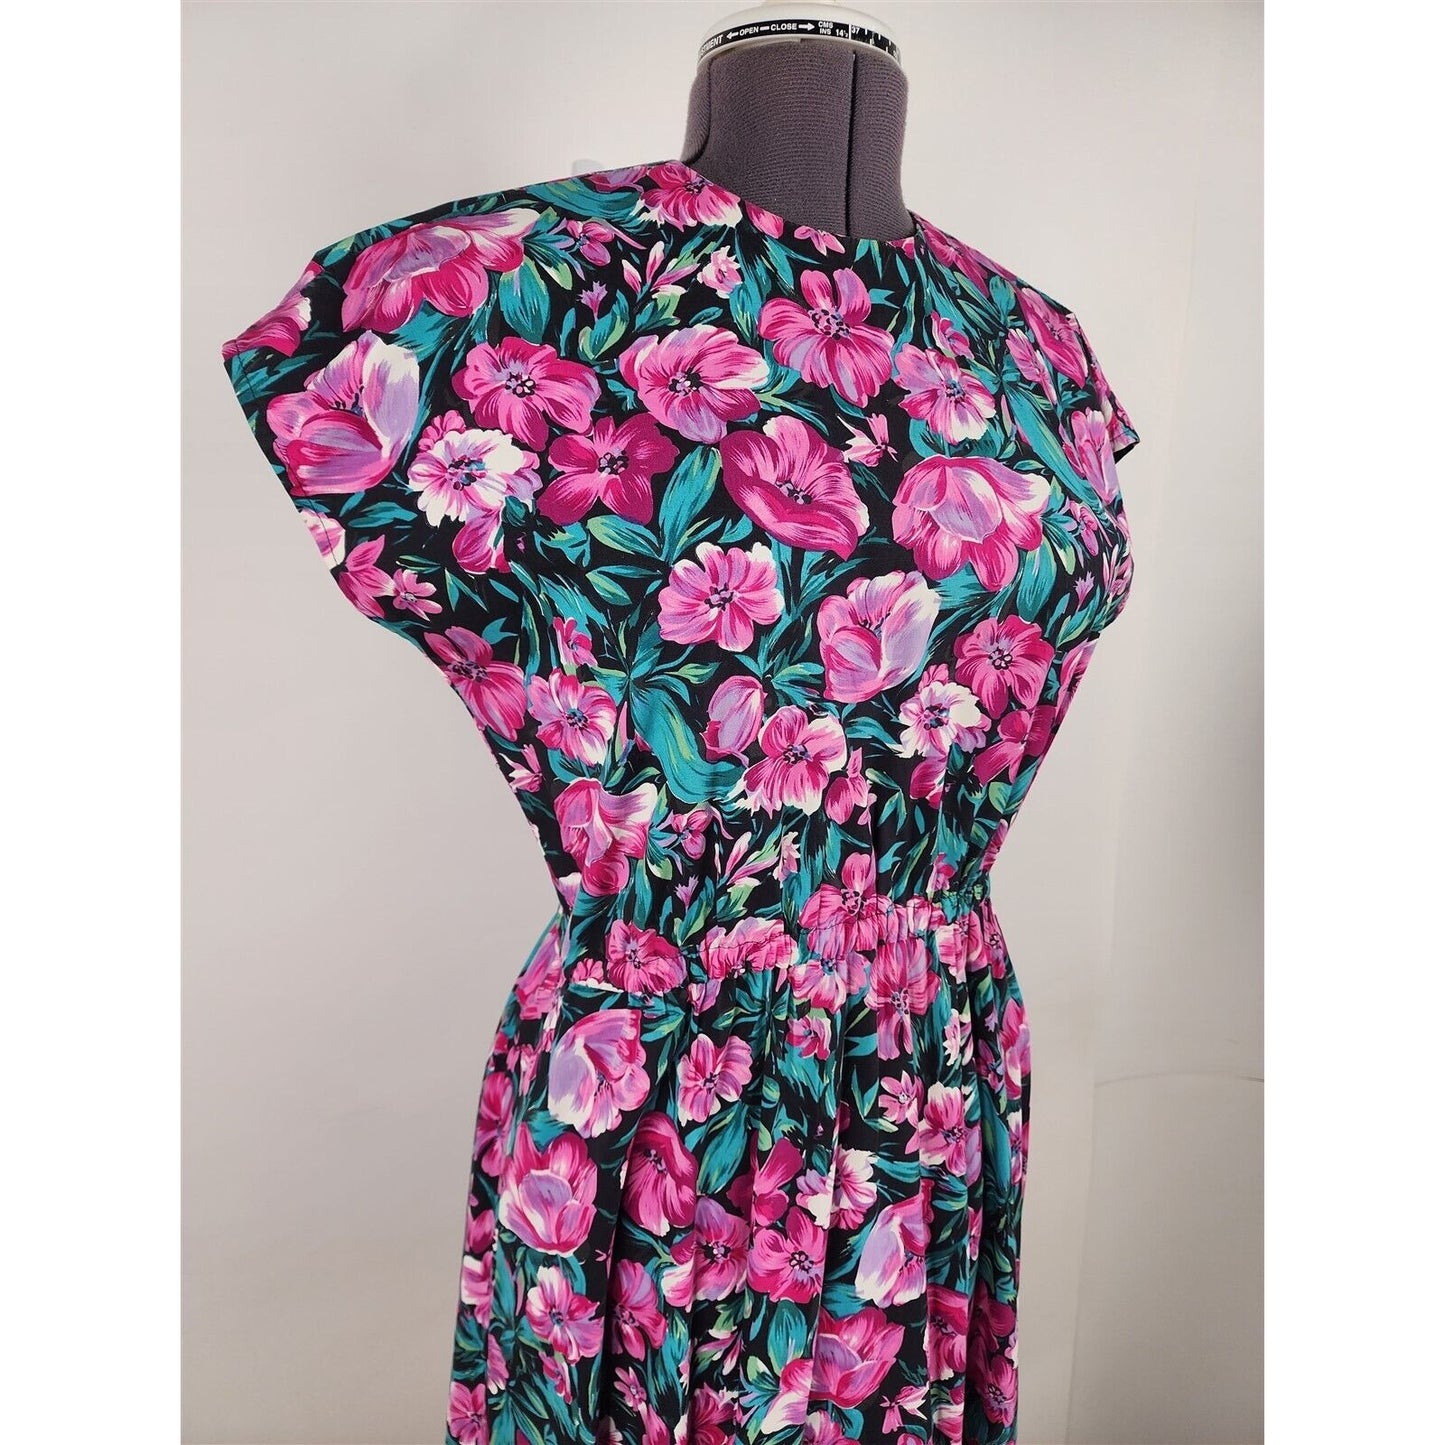 Vintage Handmade Pink Black Floral Dress Short Sleeve Womens M